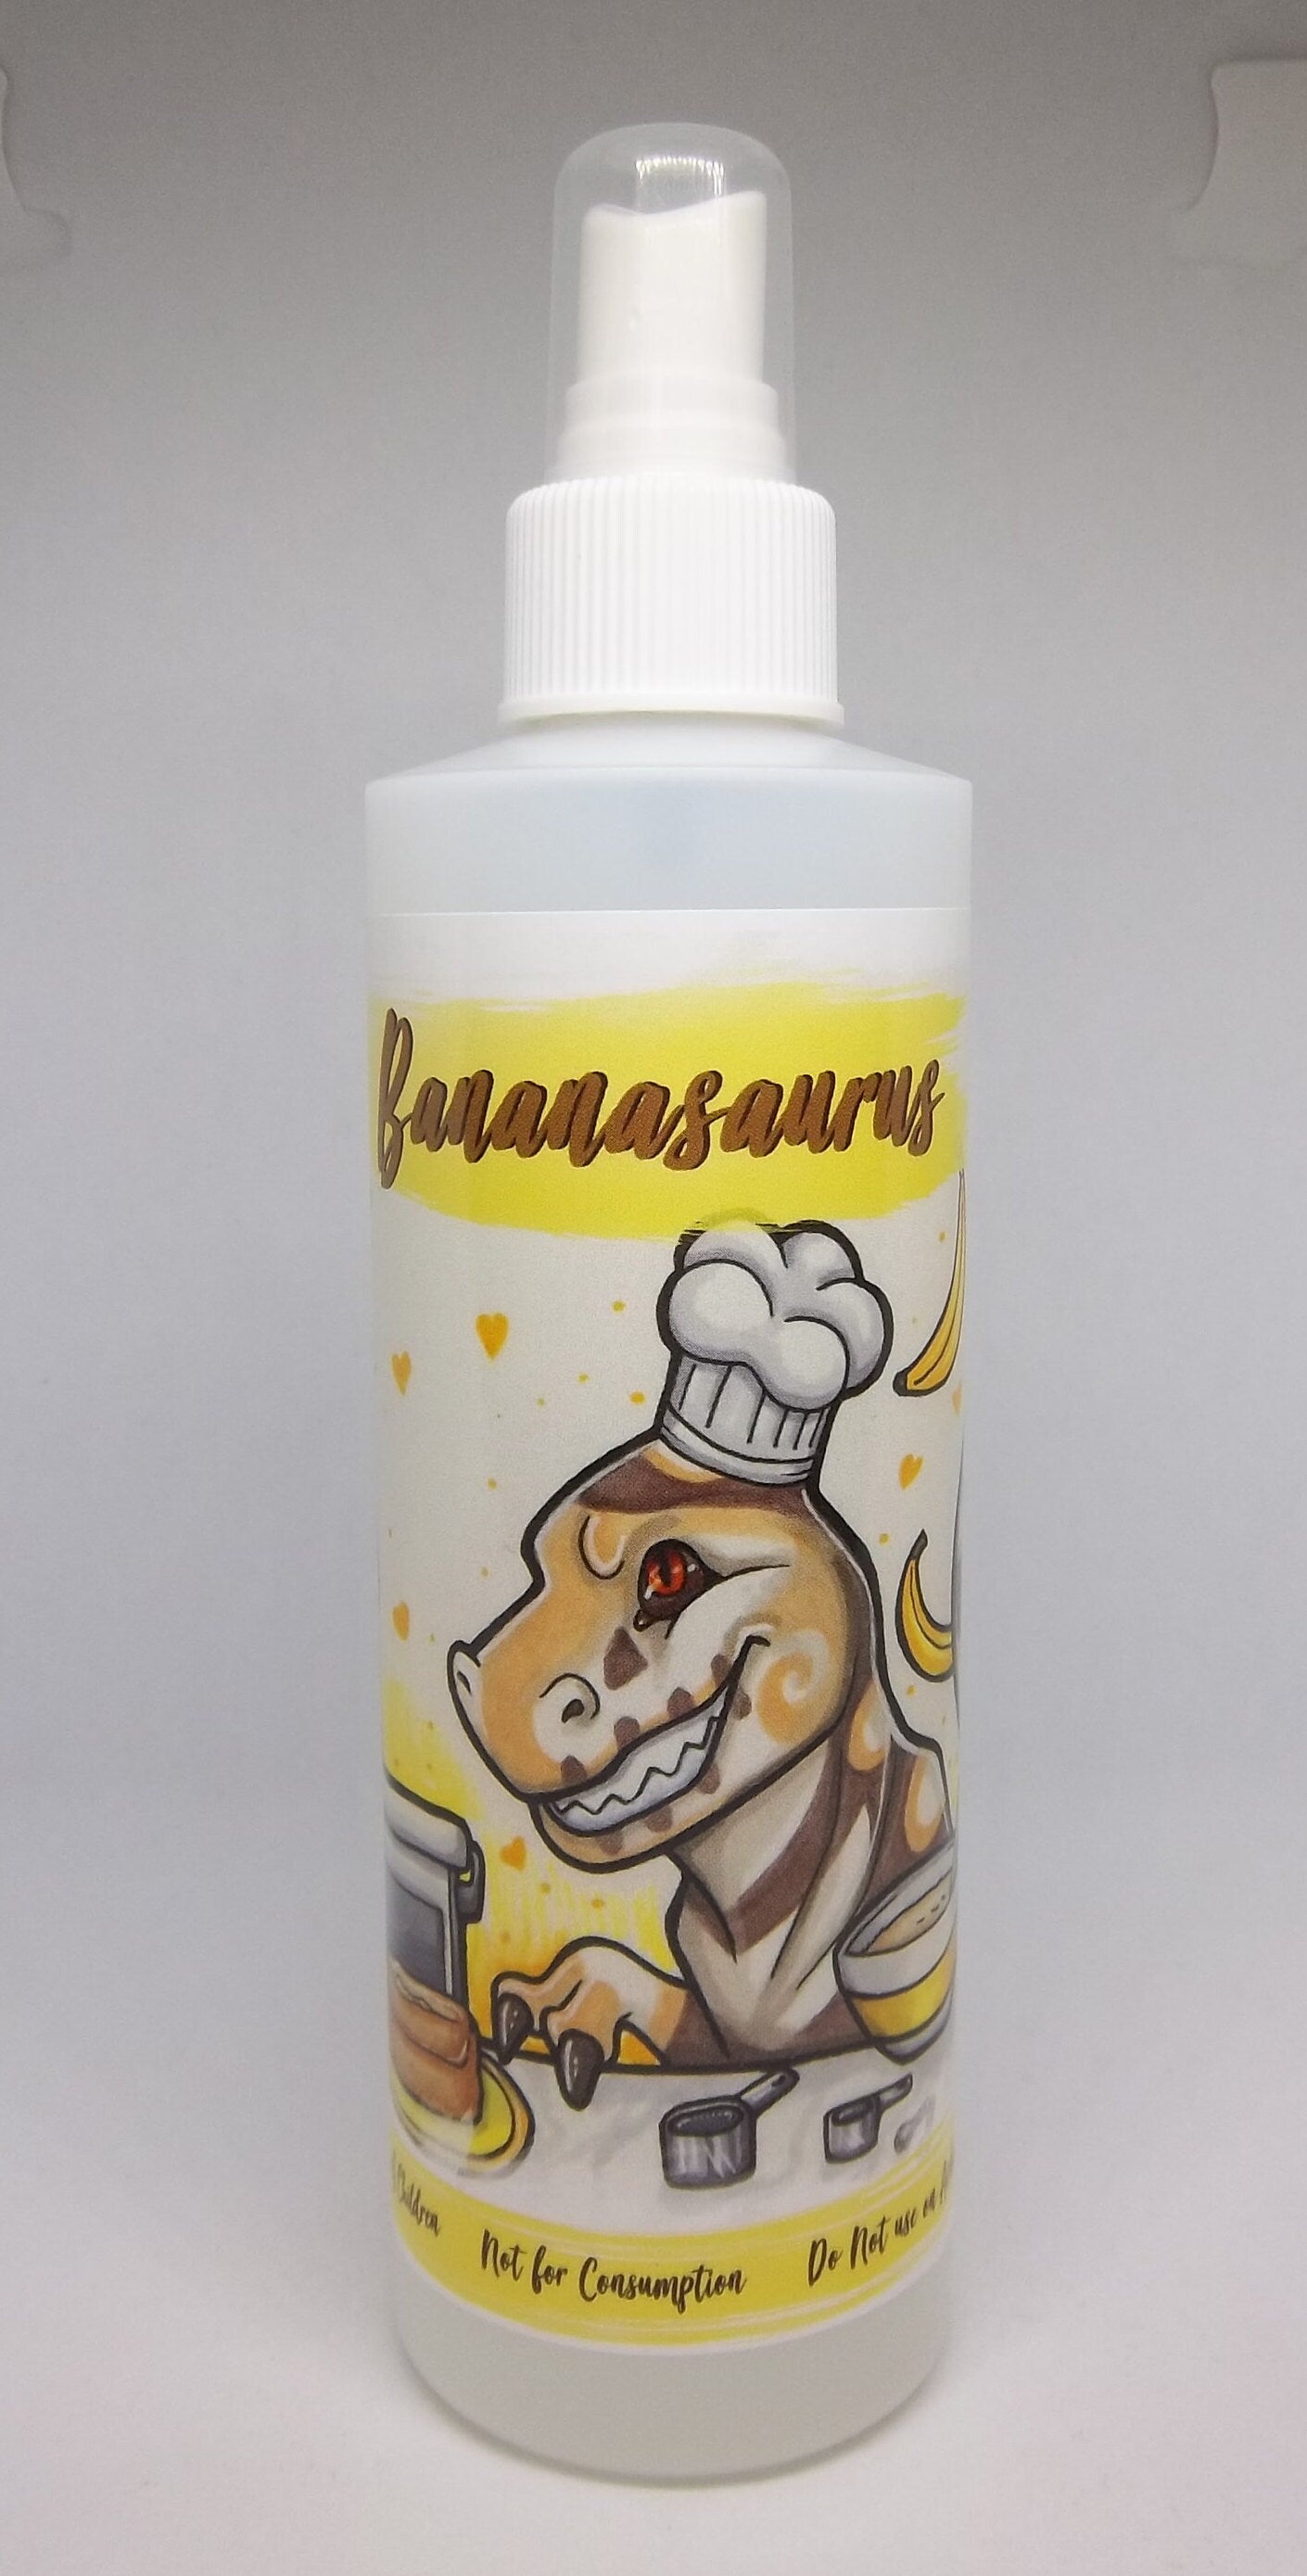 Banana Bread Fursuit Spray 8oz - Bananasaurus Fragrance and Essential Costume Cleaner